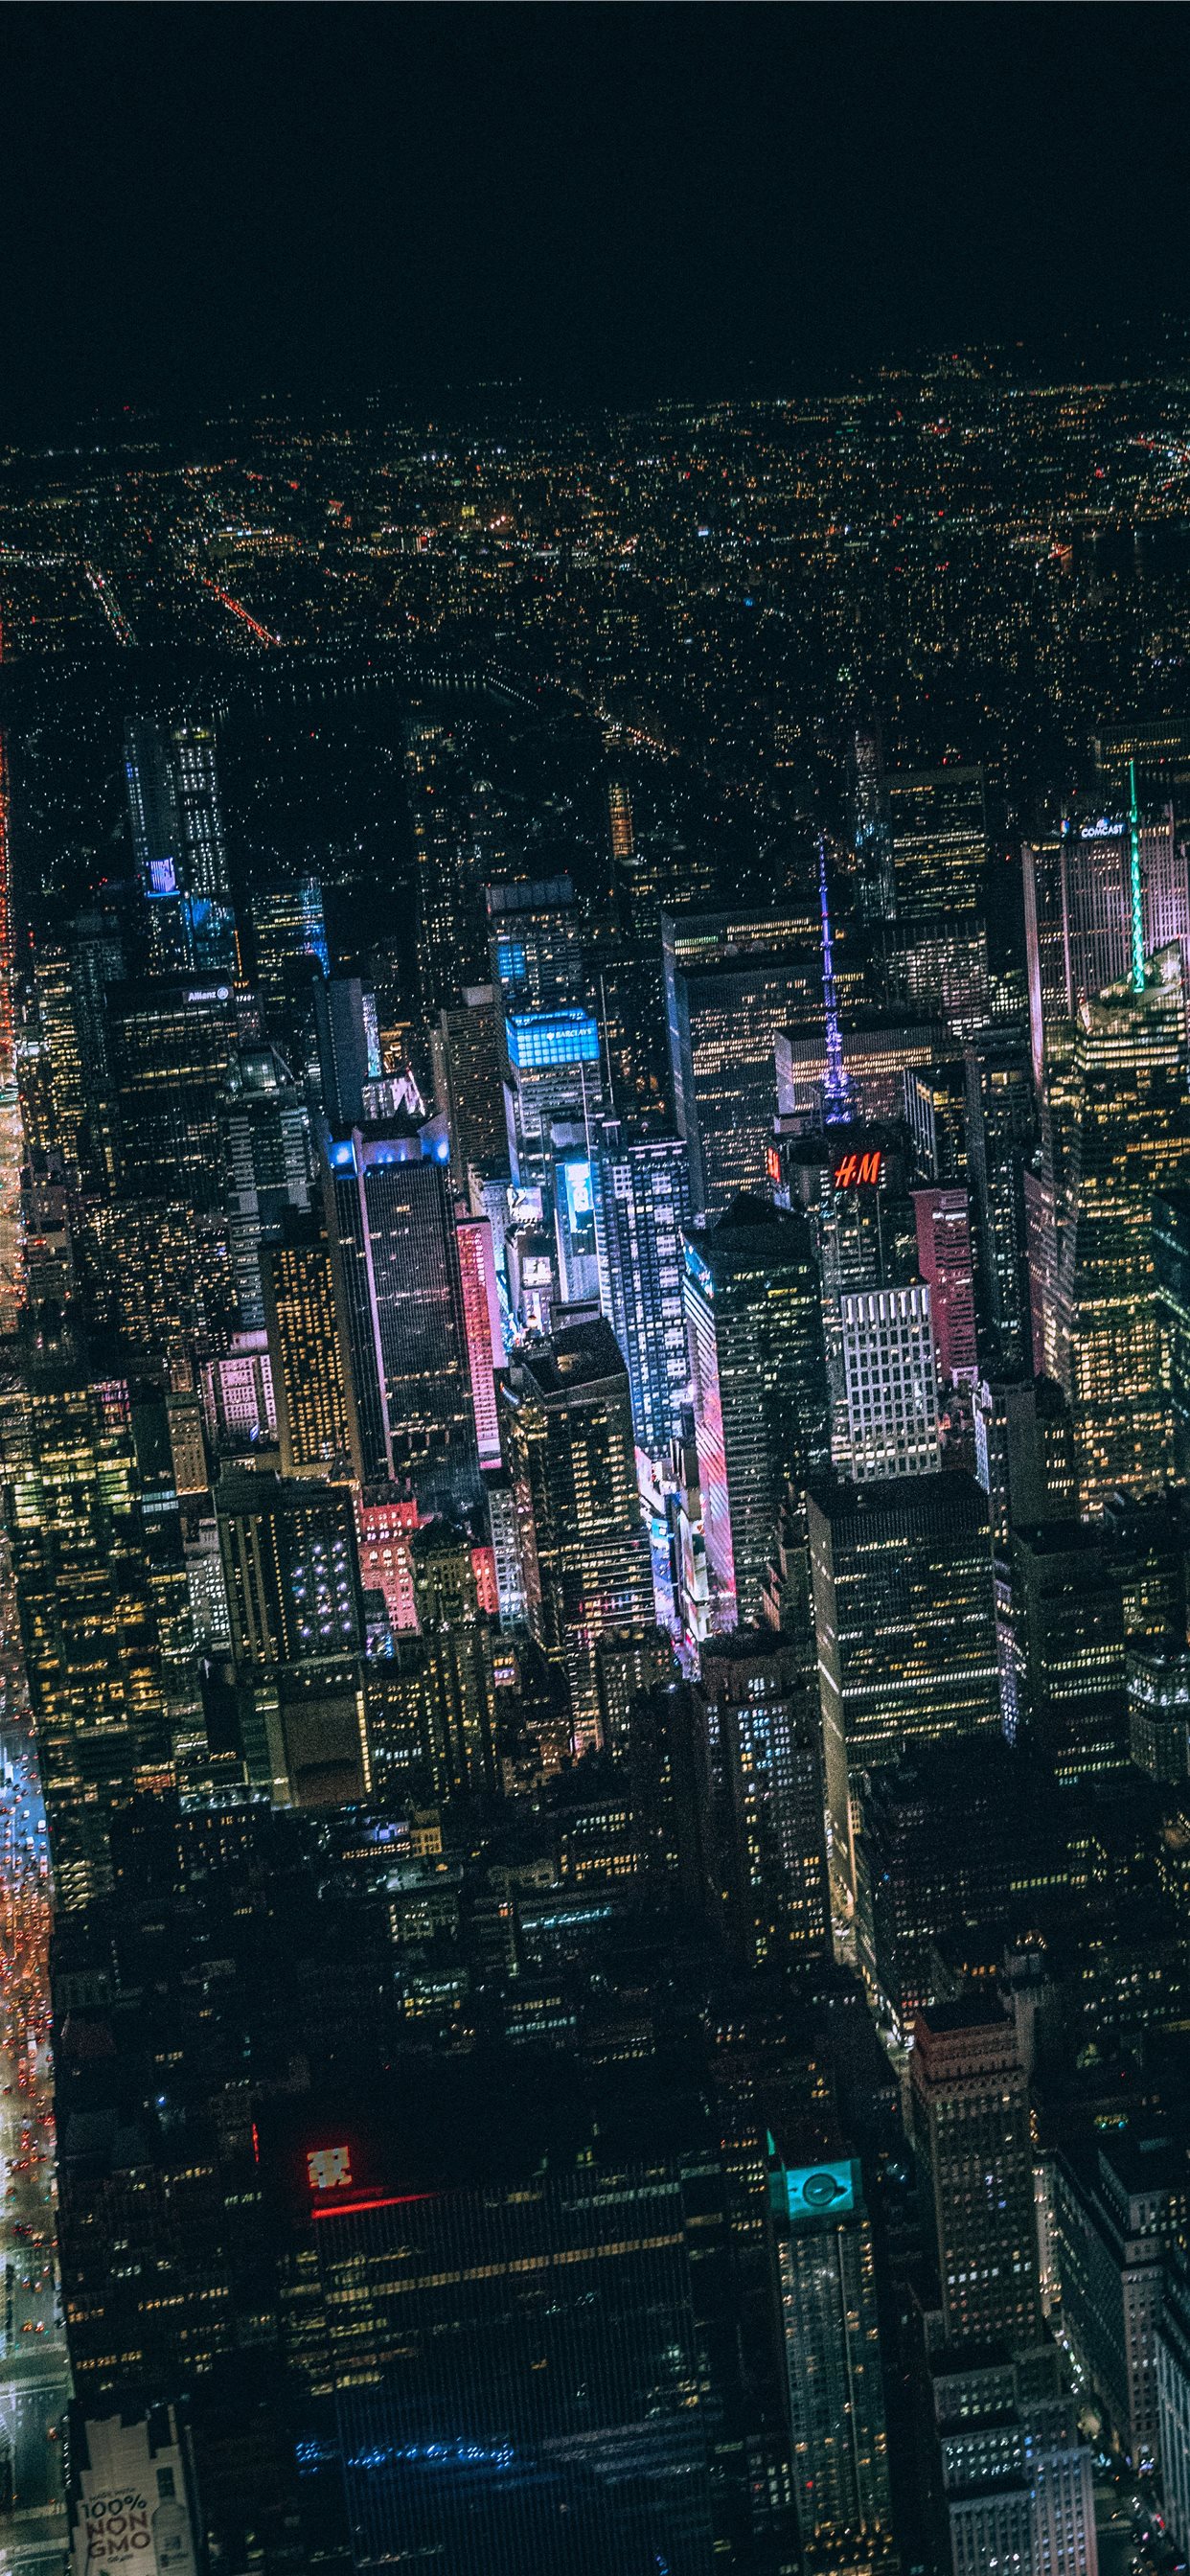 Cybepunk Night City SciFi Cityscape Buildings 4K Wallpaper 62531